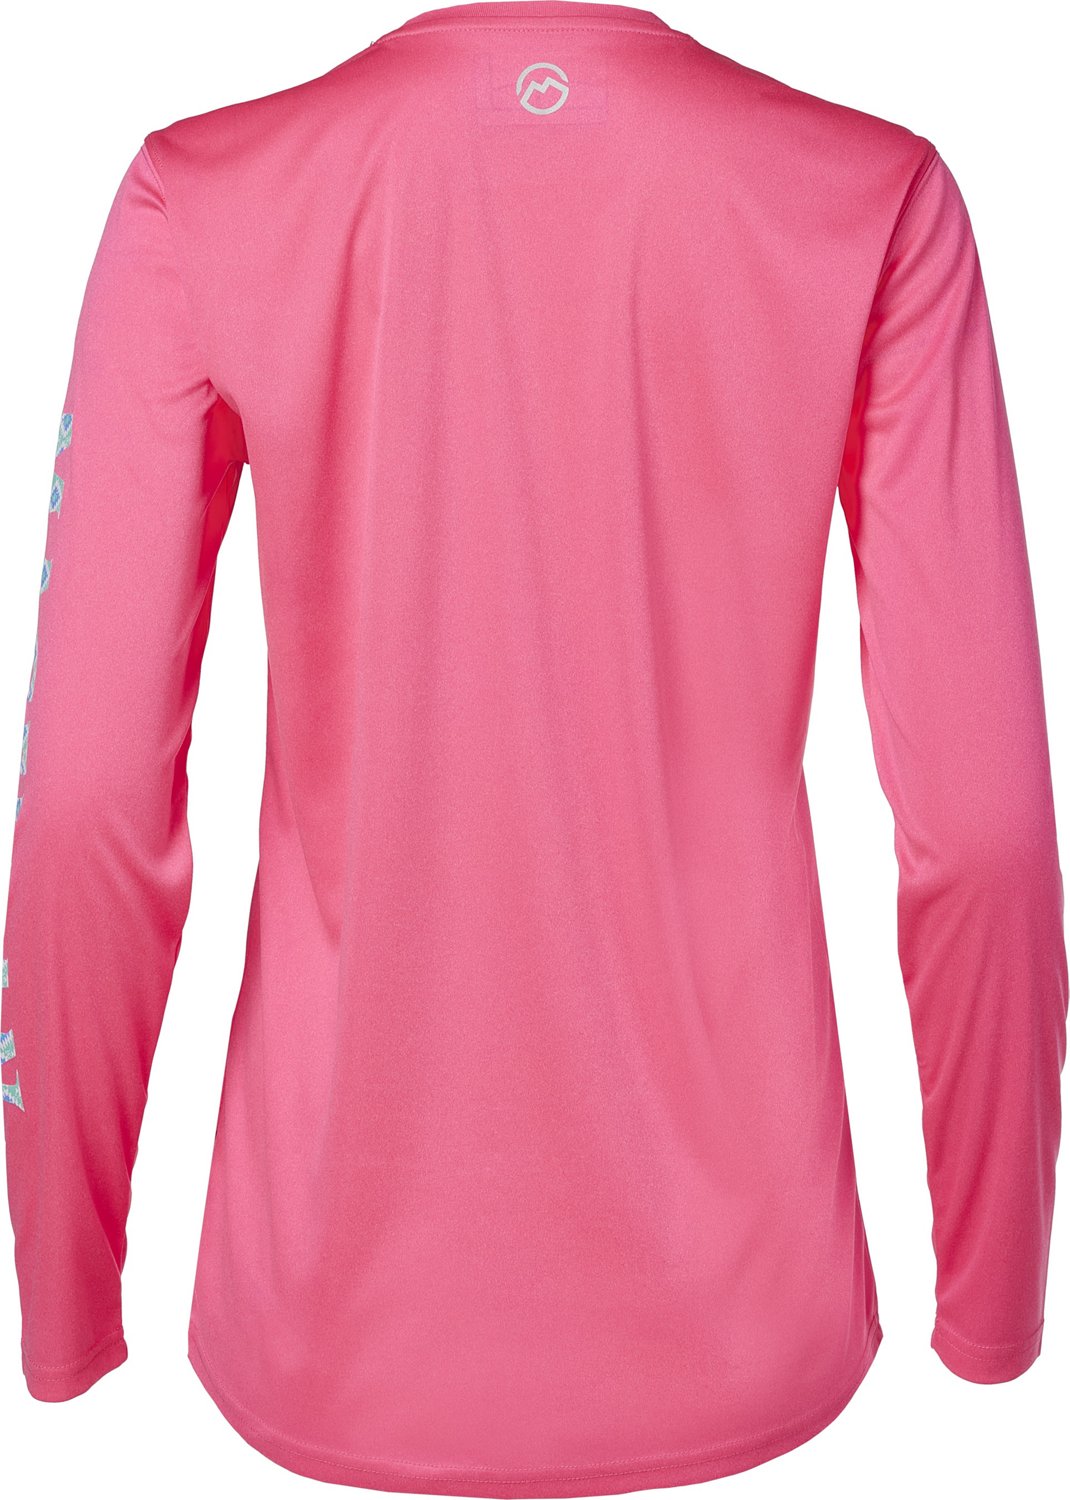 Magellan Womens Long Sleeve Thermal Shirt Large Pink Striped Stretch NWOT